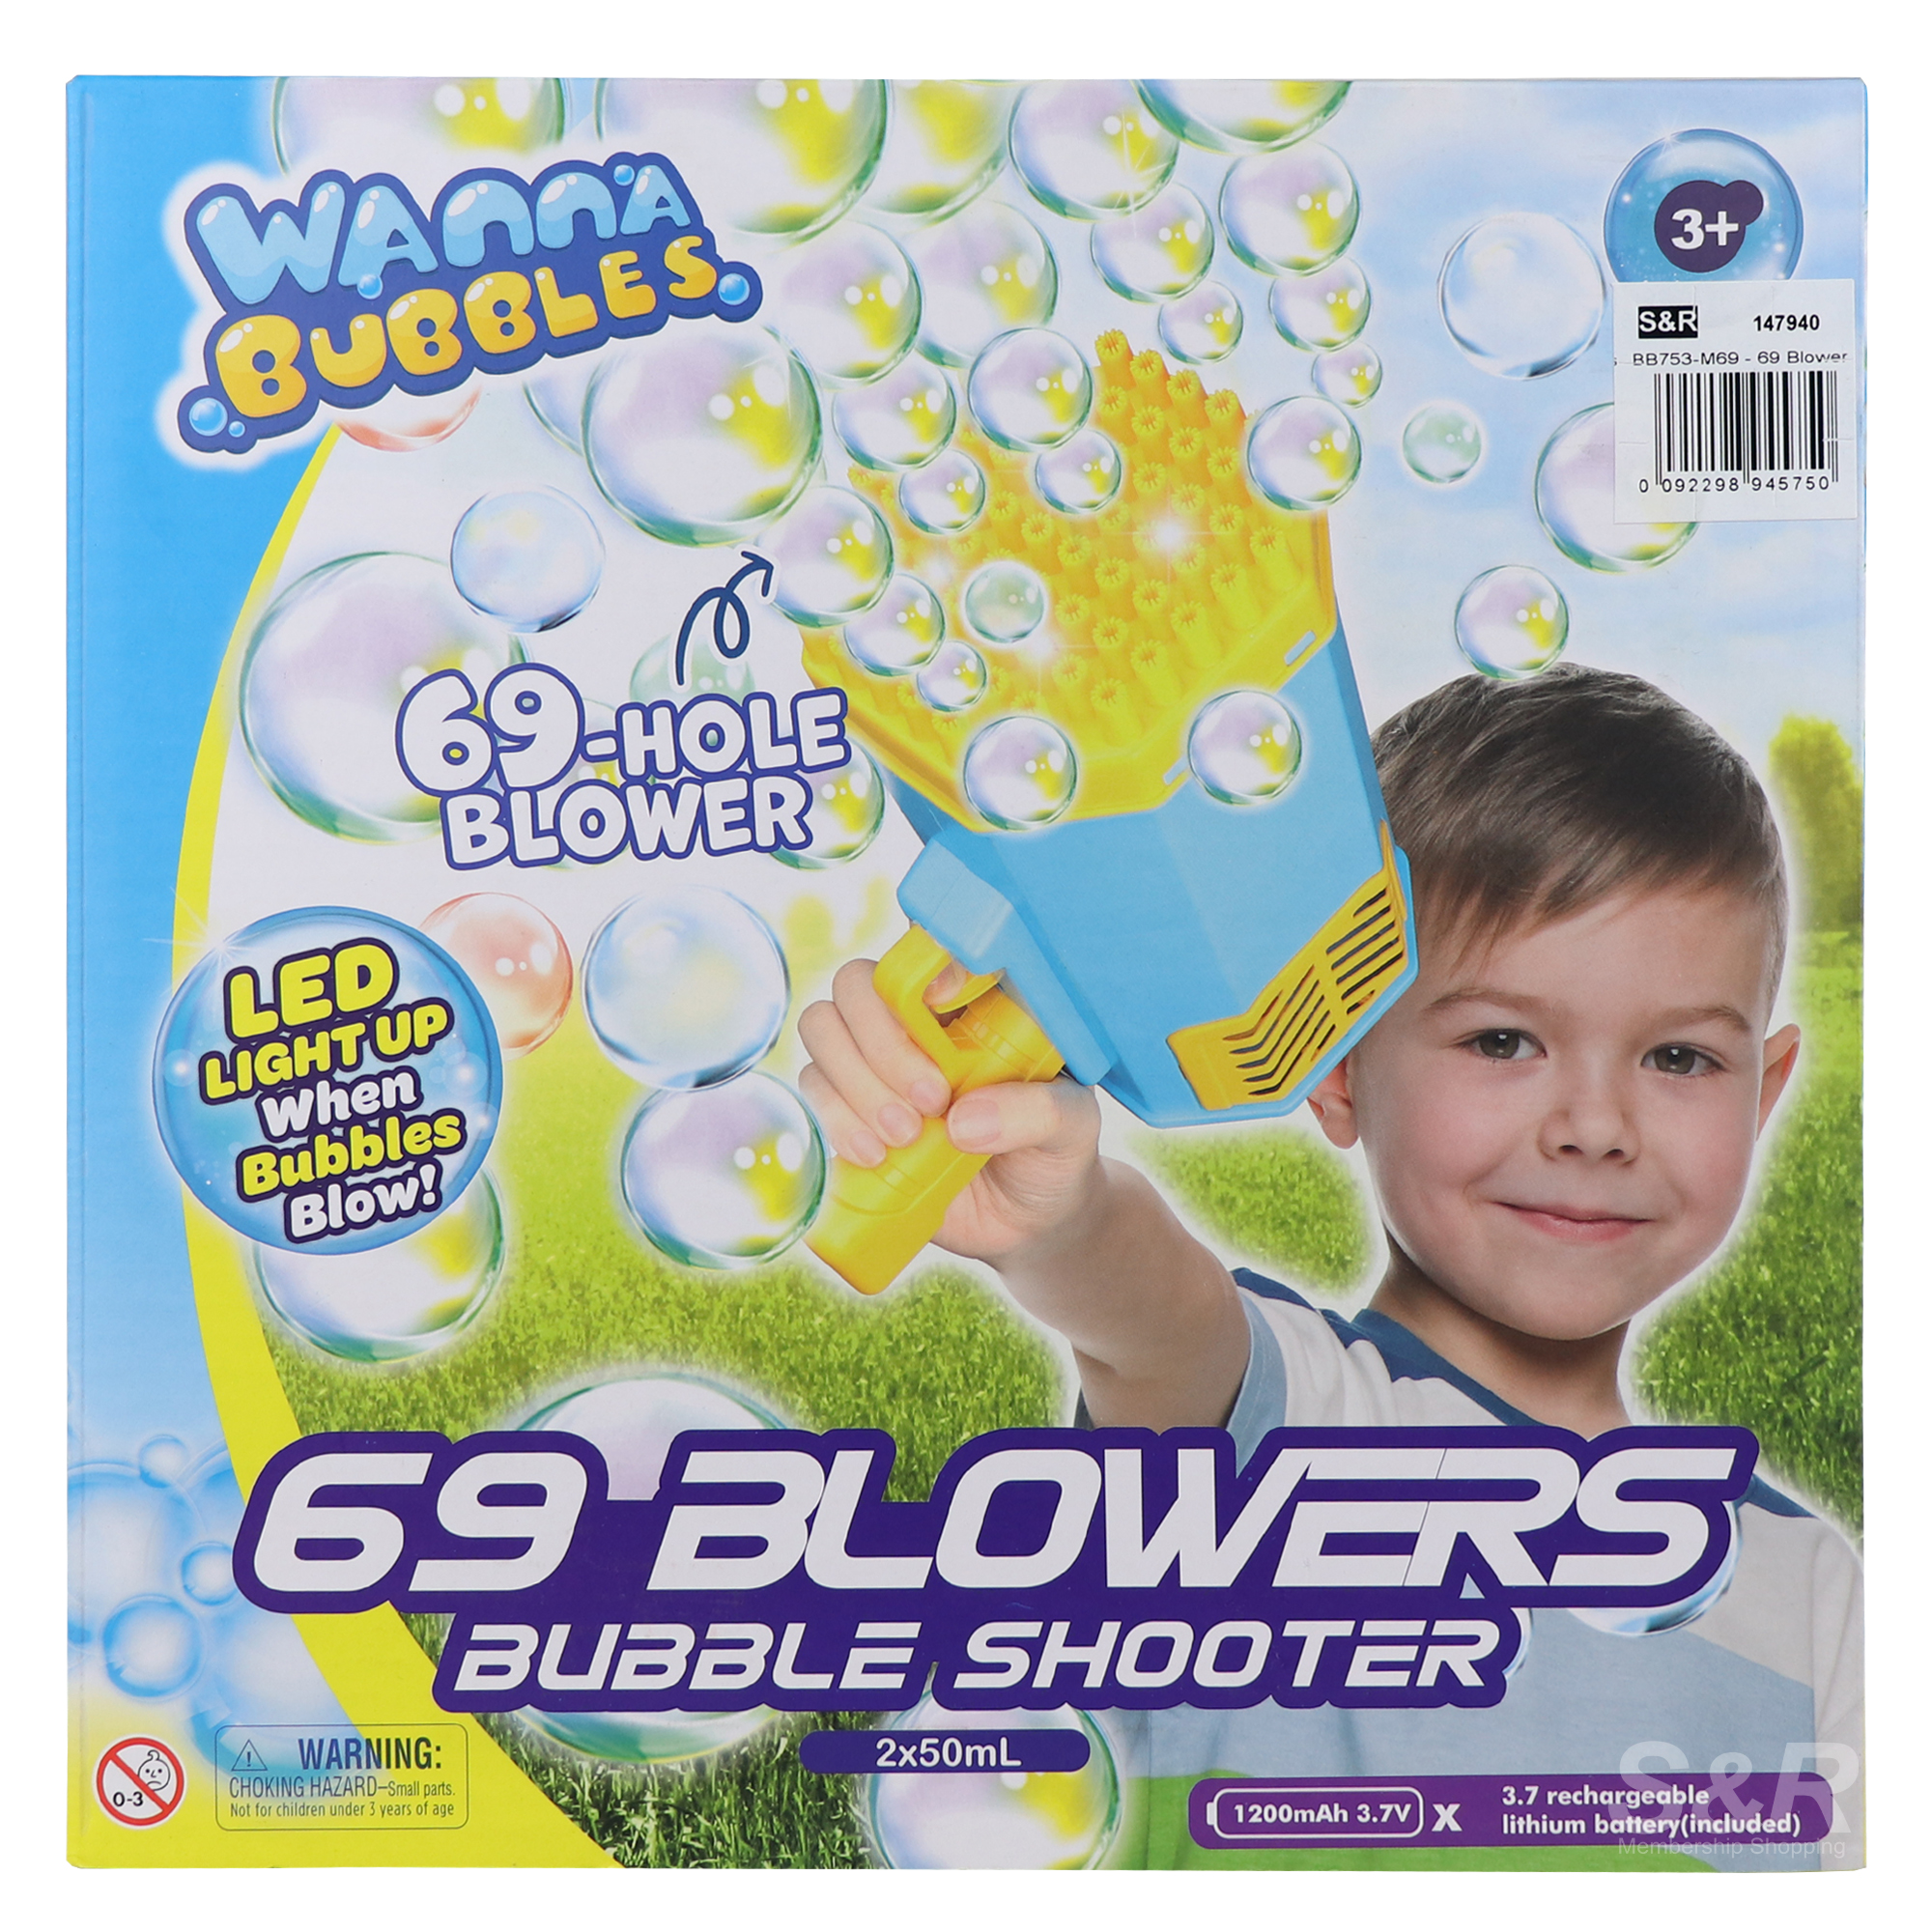 Wanna Bubbles 69 Blowers Bubble Shooter BB753-M69